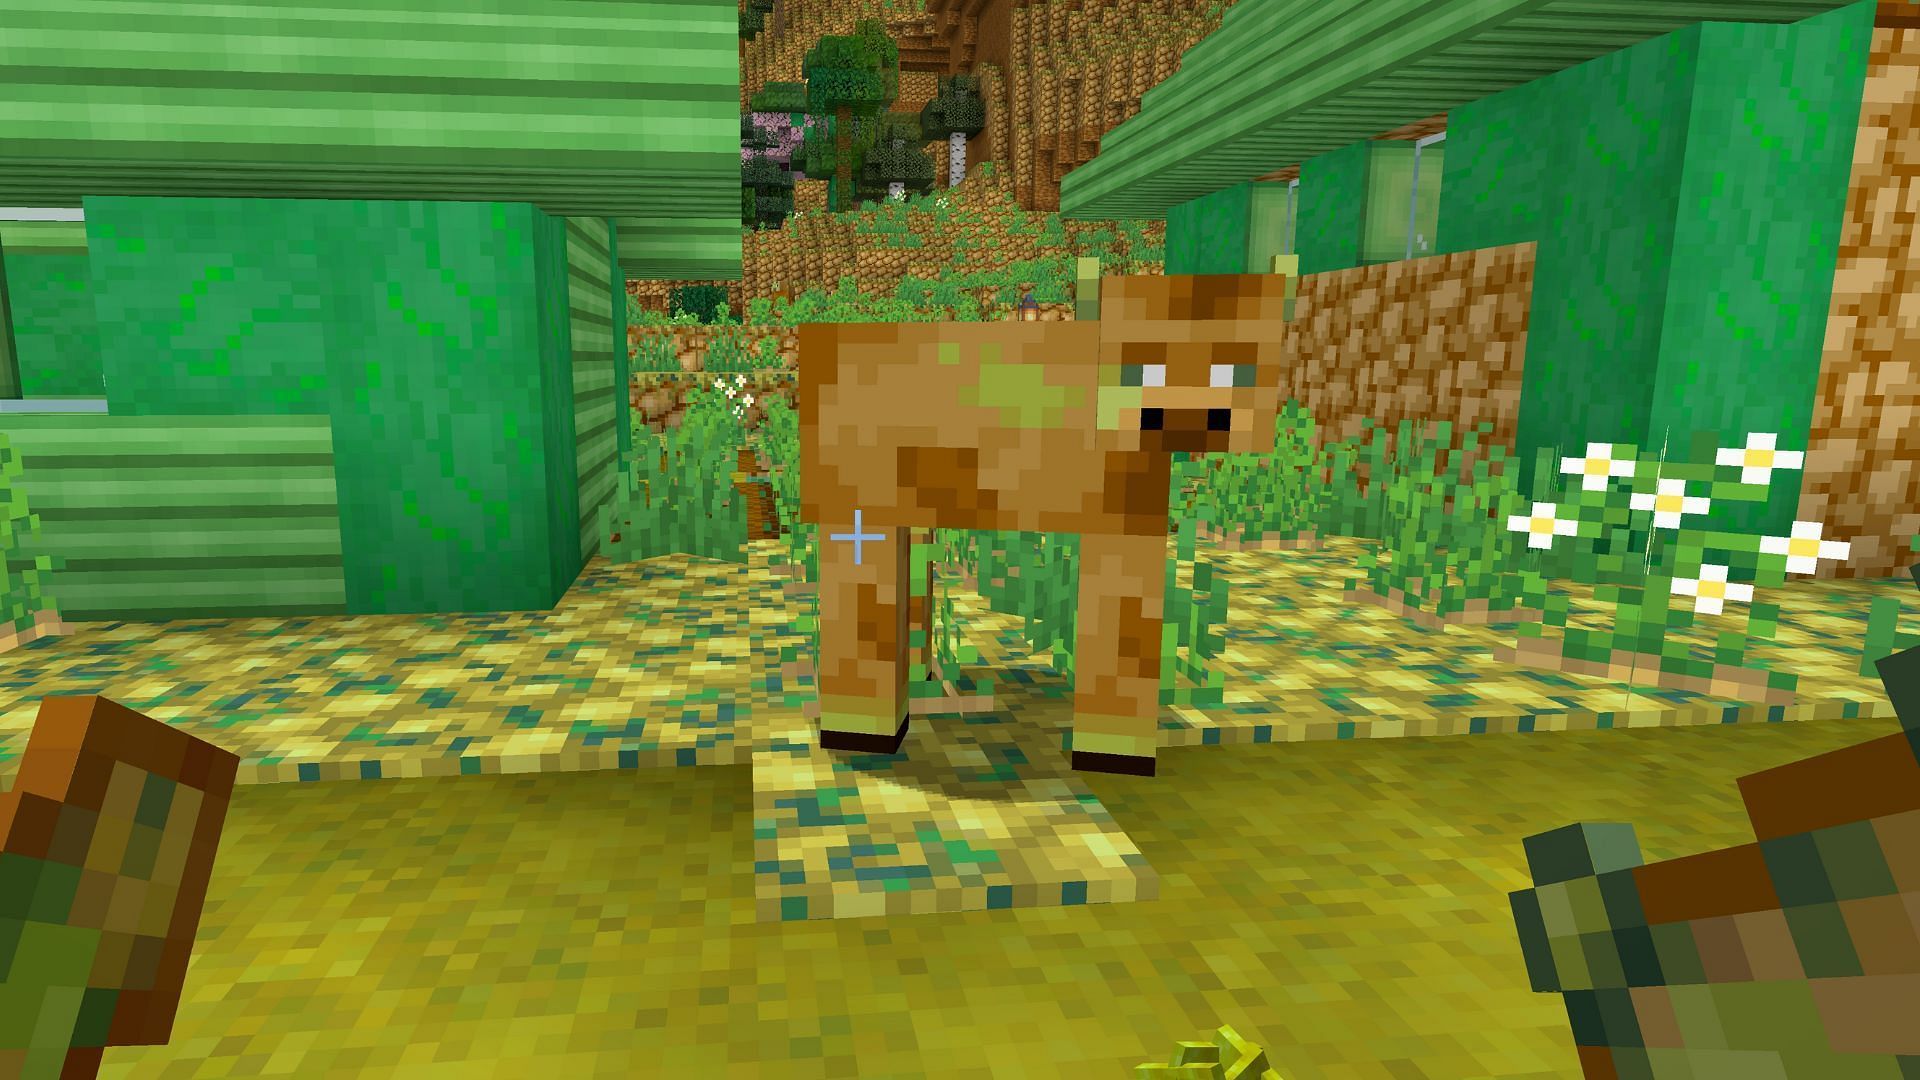 Cow in Potato dimension (Image via Mojang Studios)